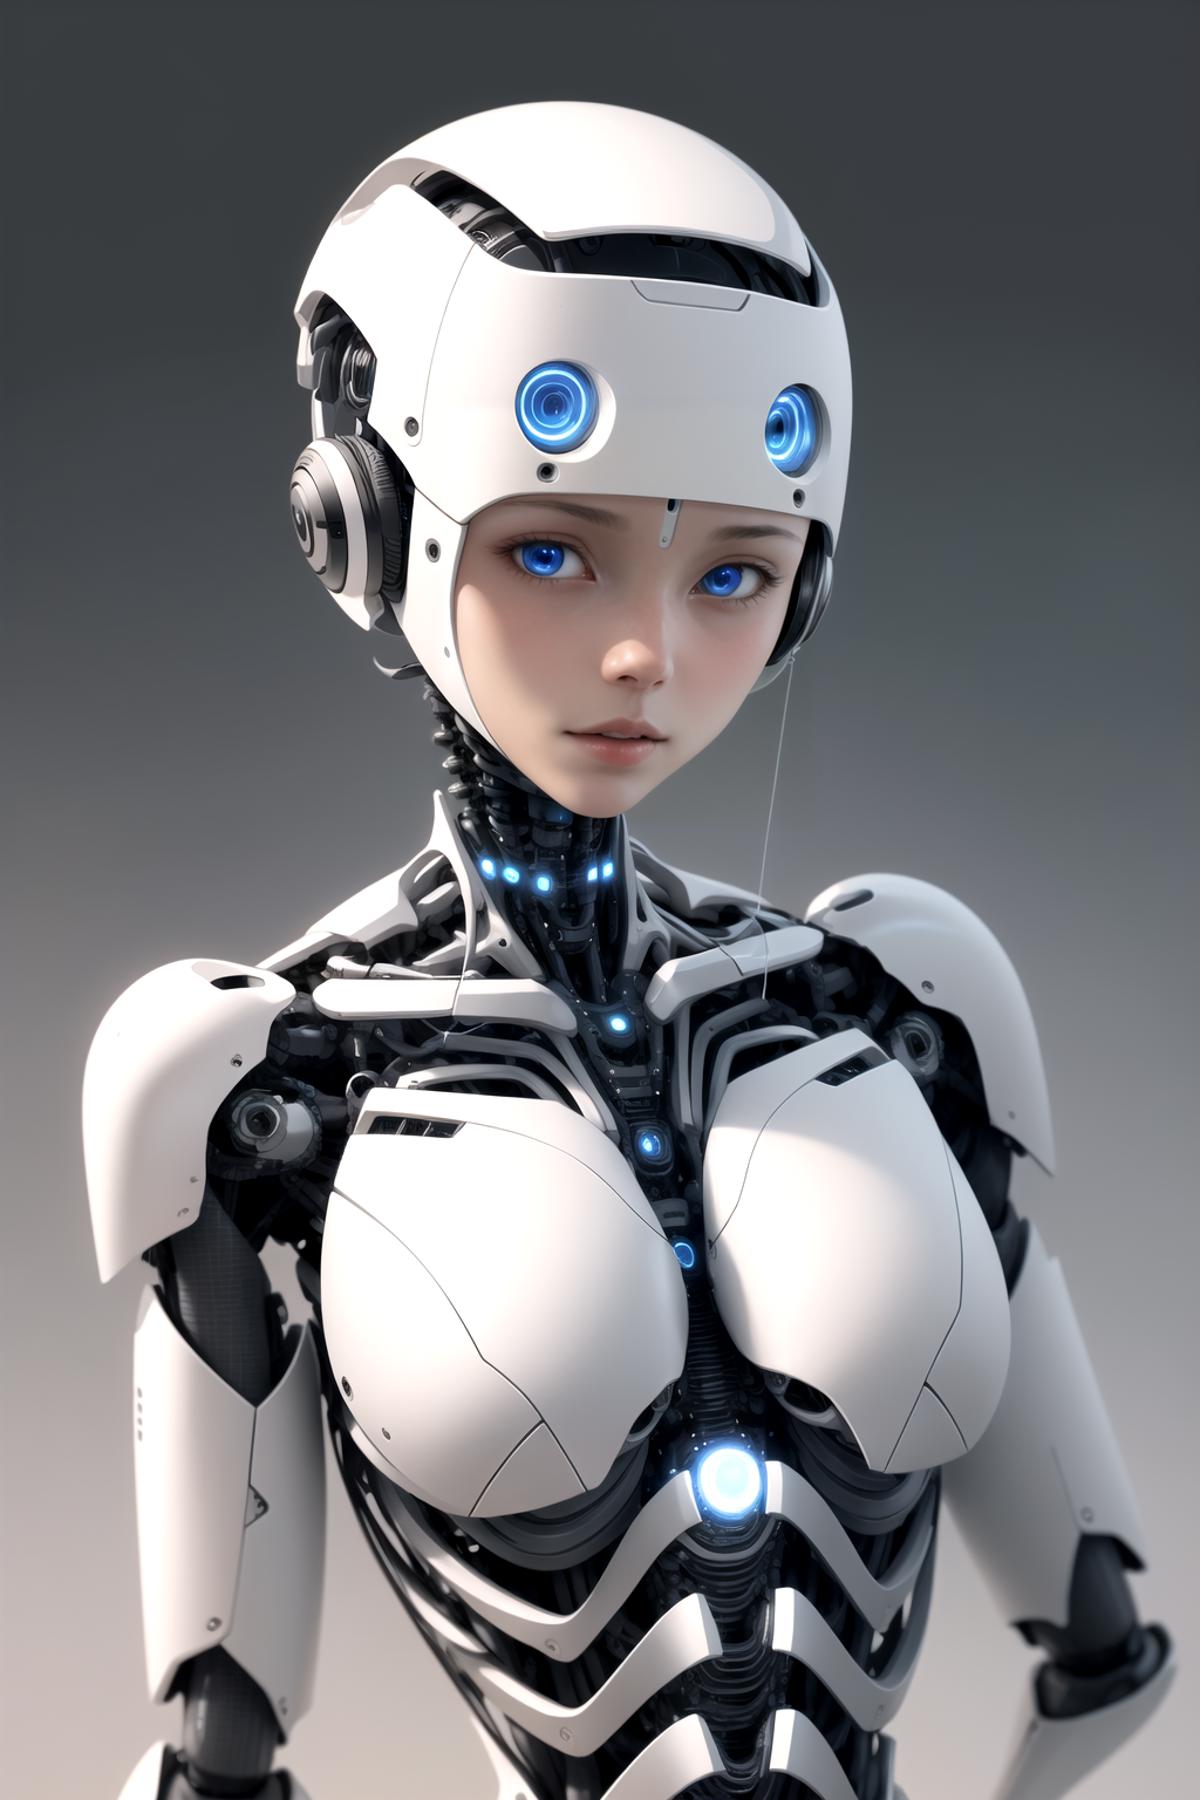 AI model image by Artemis